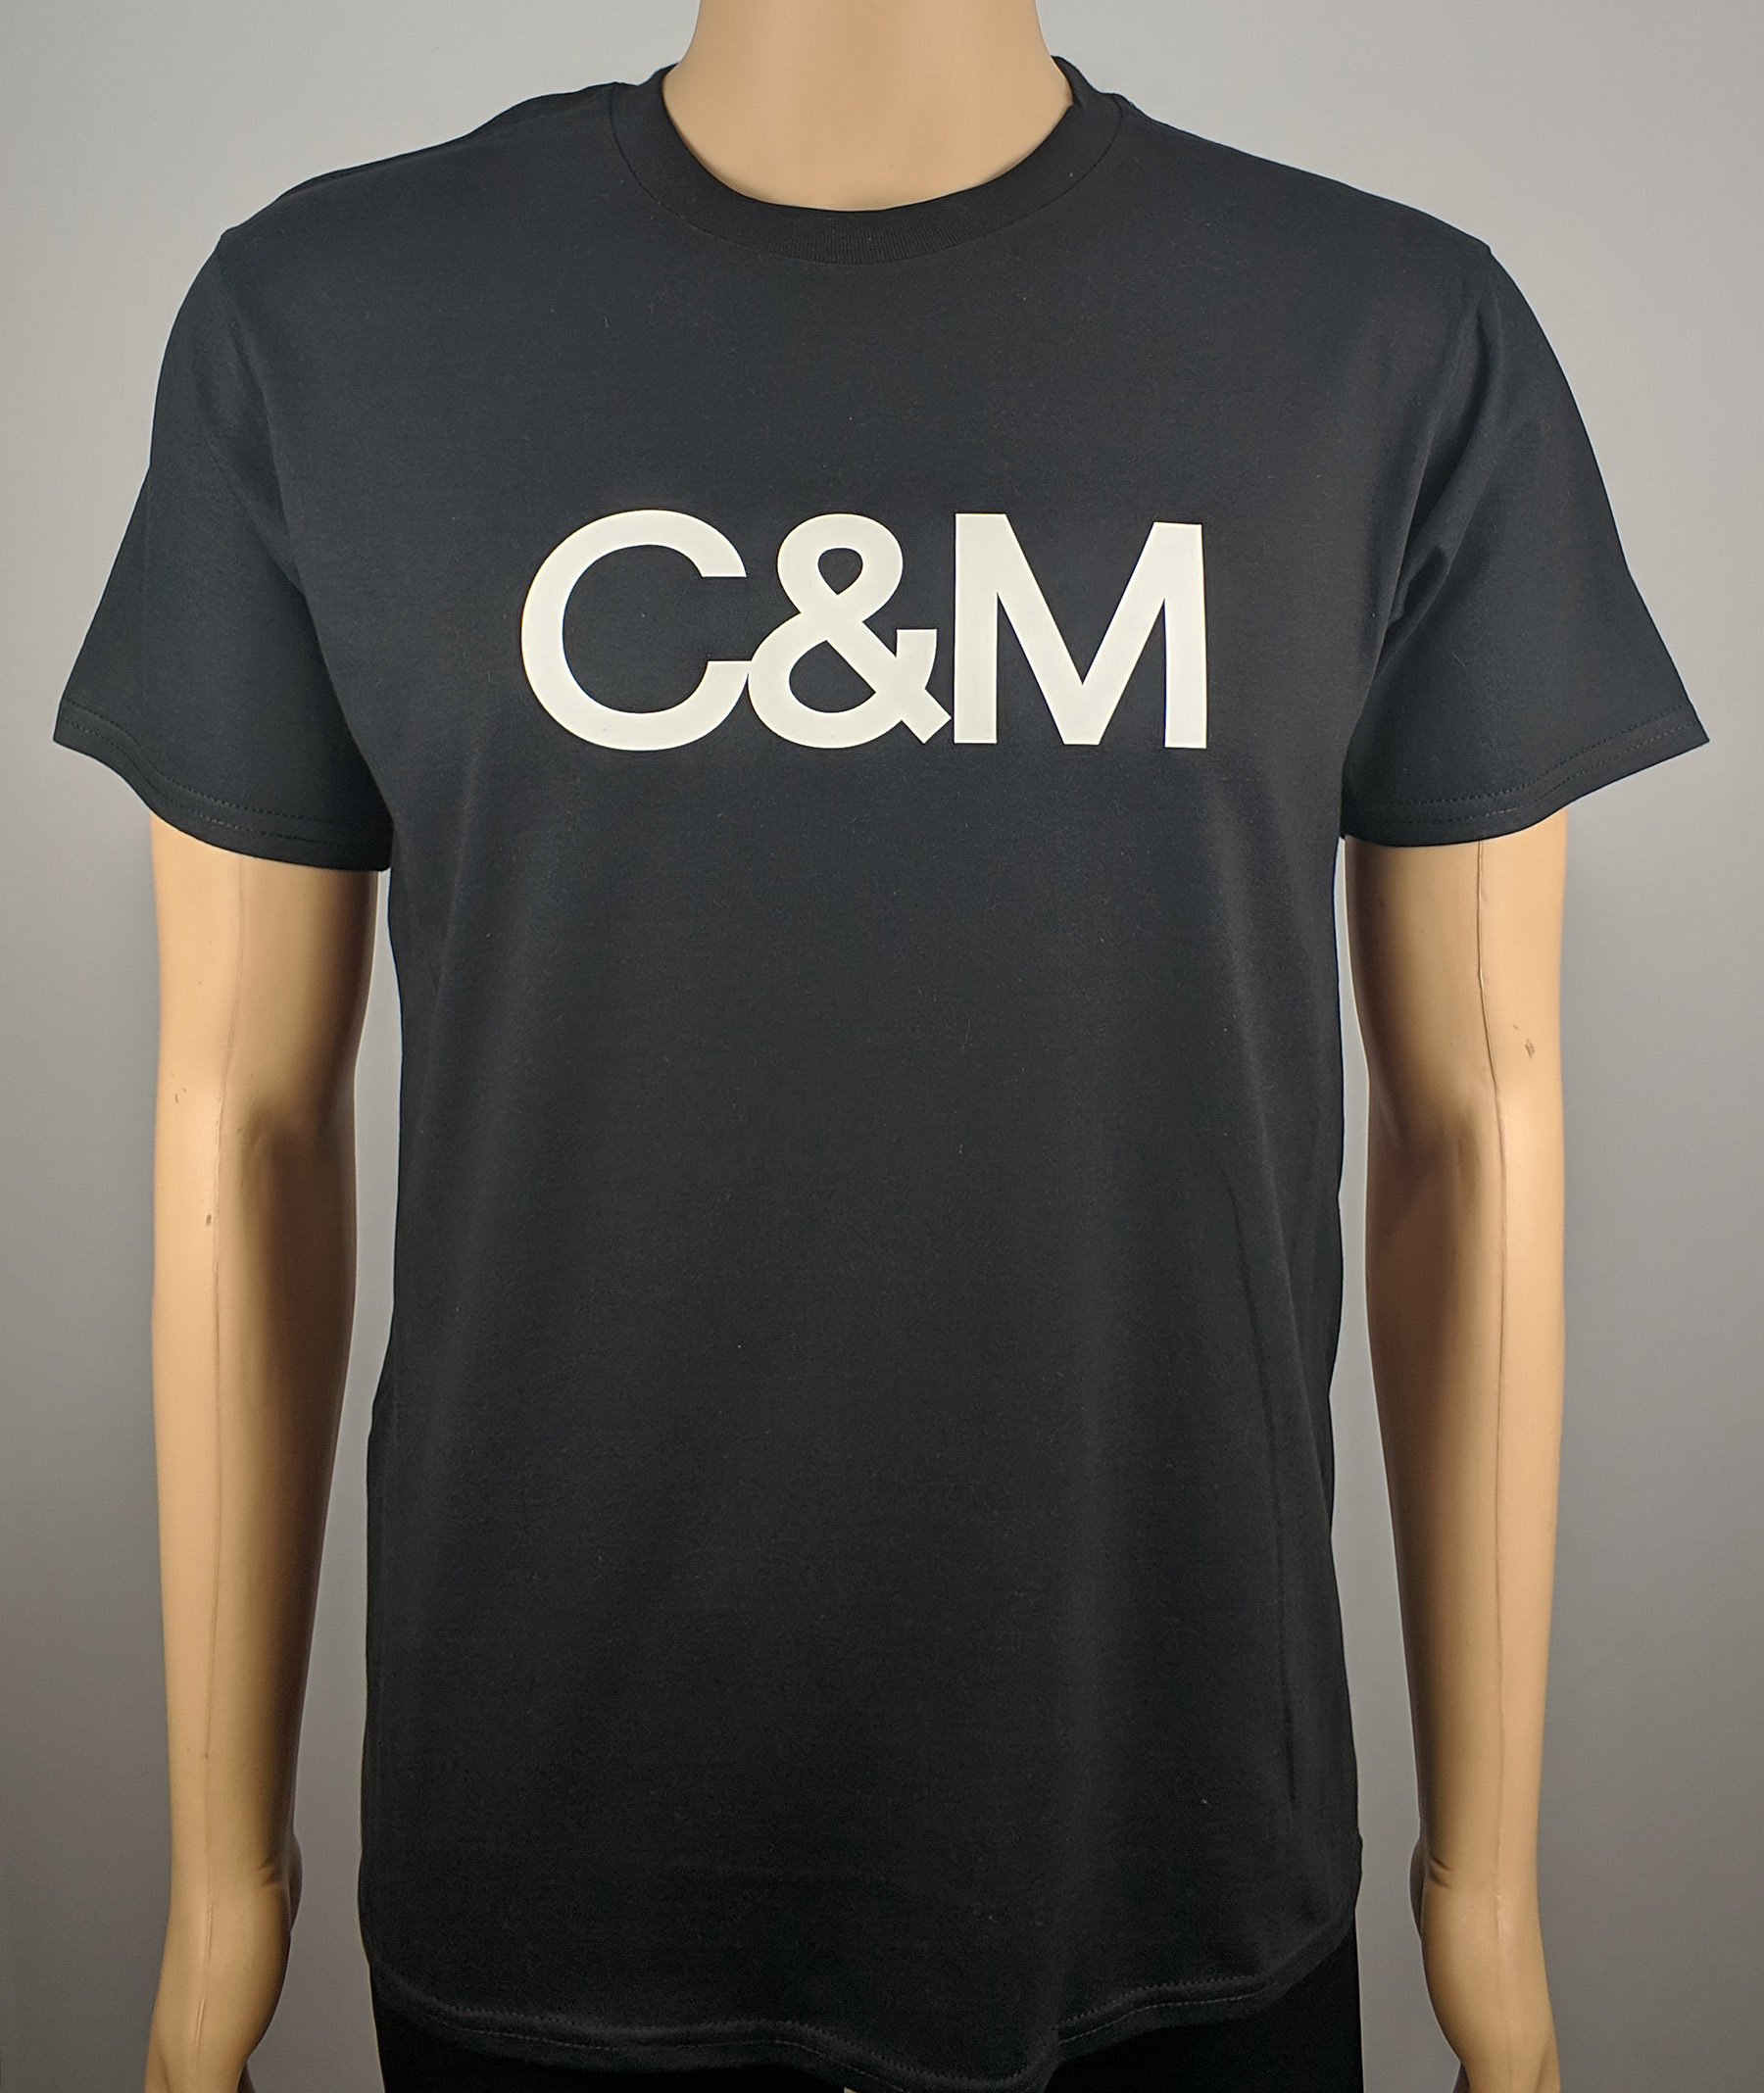 Custom printed cotton t-shirt with C&M design